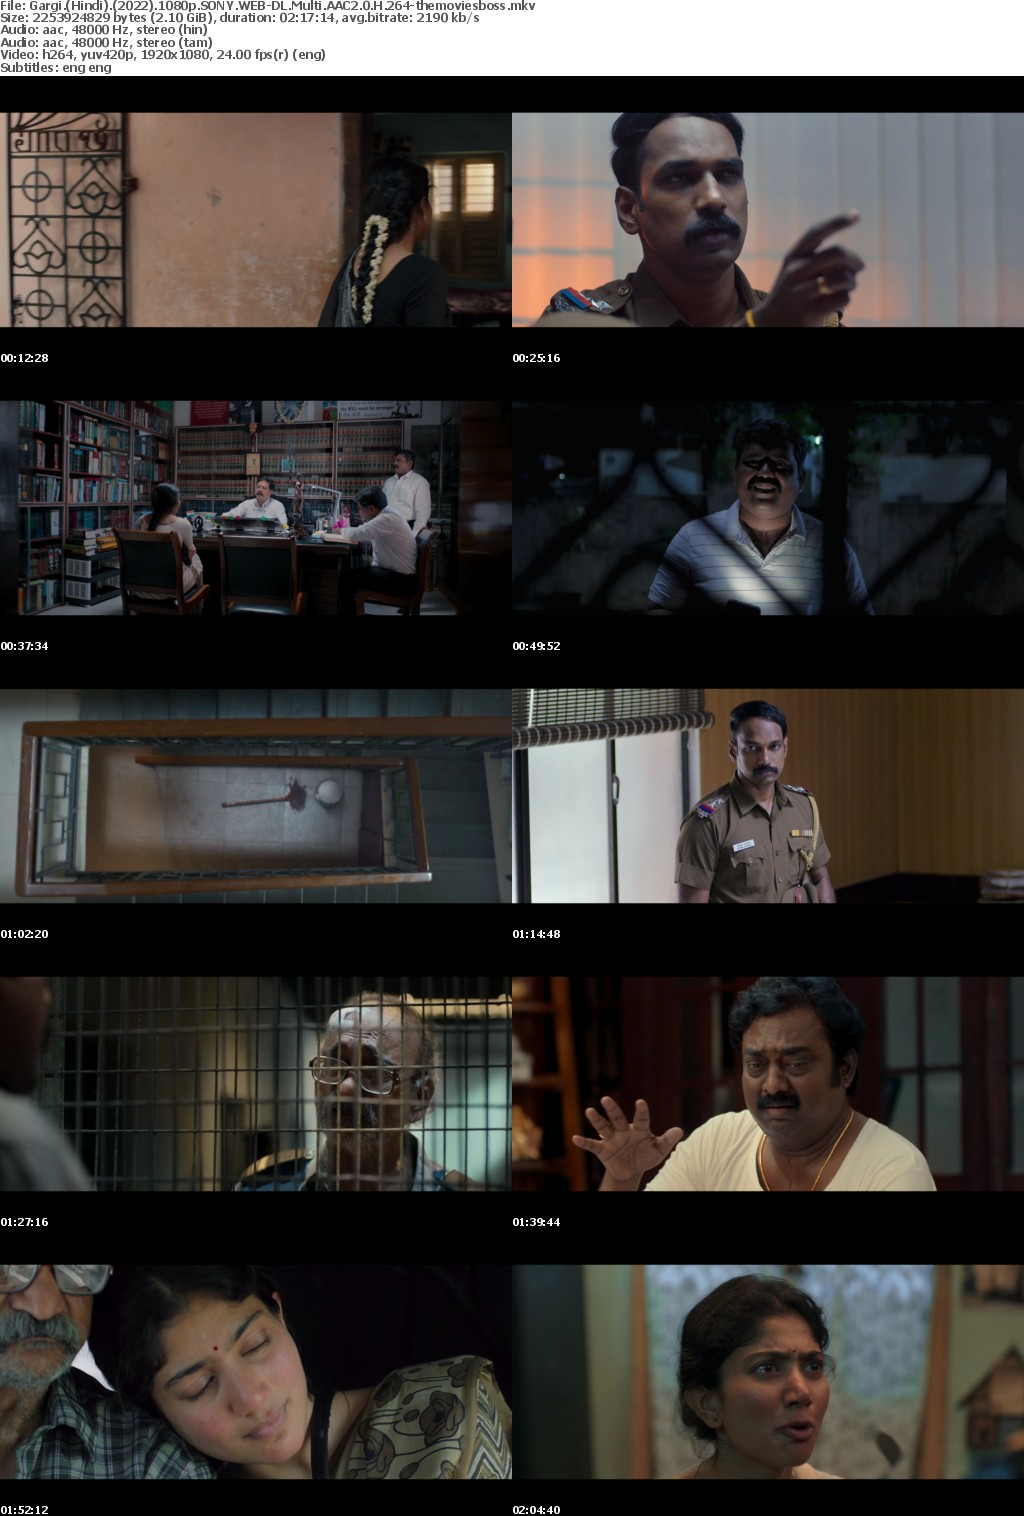 Gargi (Hindi) (2022) 1080p SONY WEB-DL Multi AAC2 0 H 264-themoviesboss